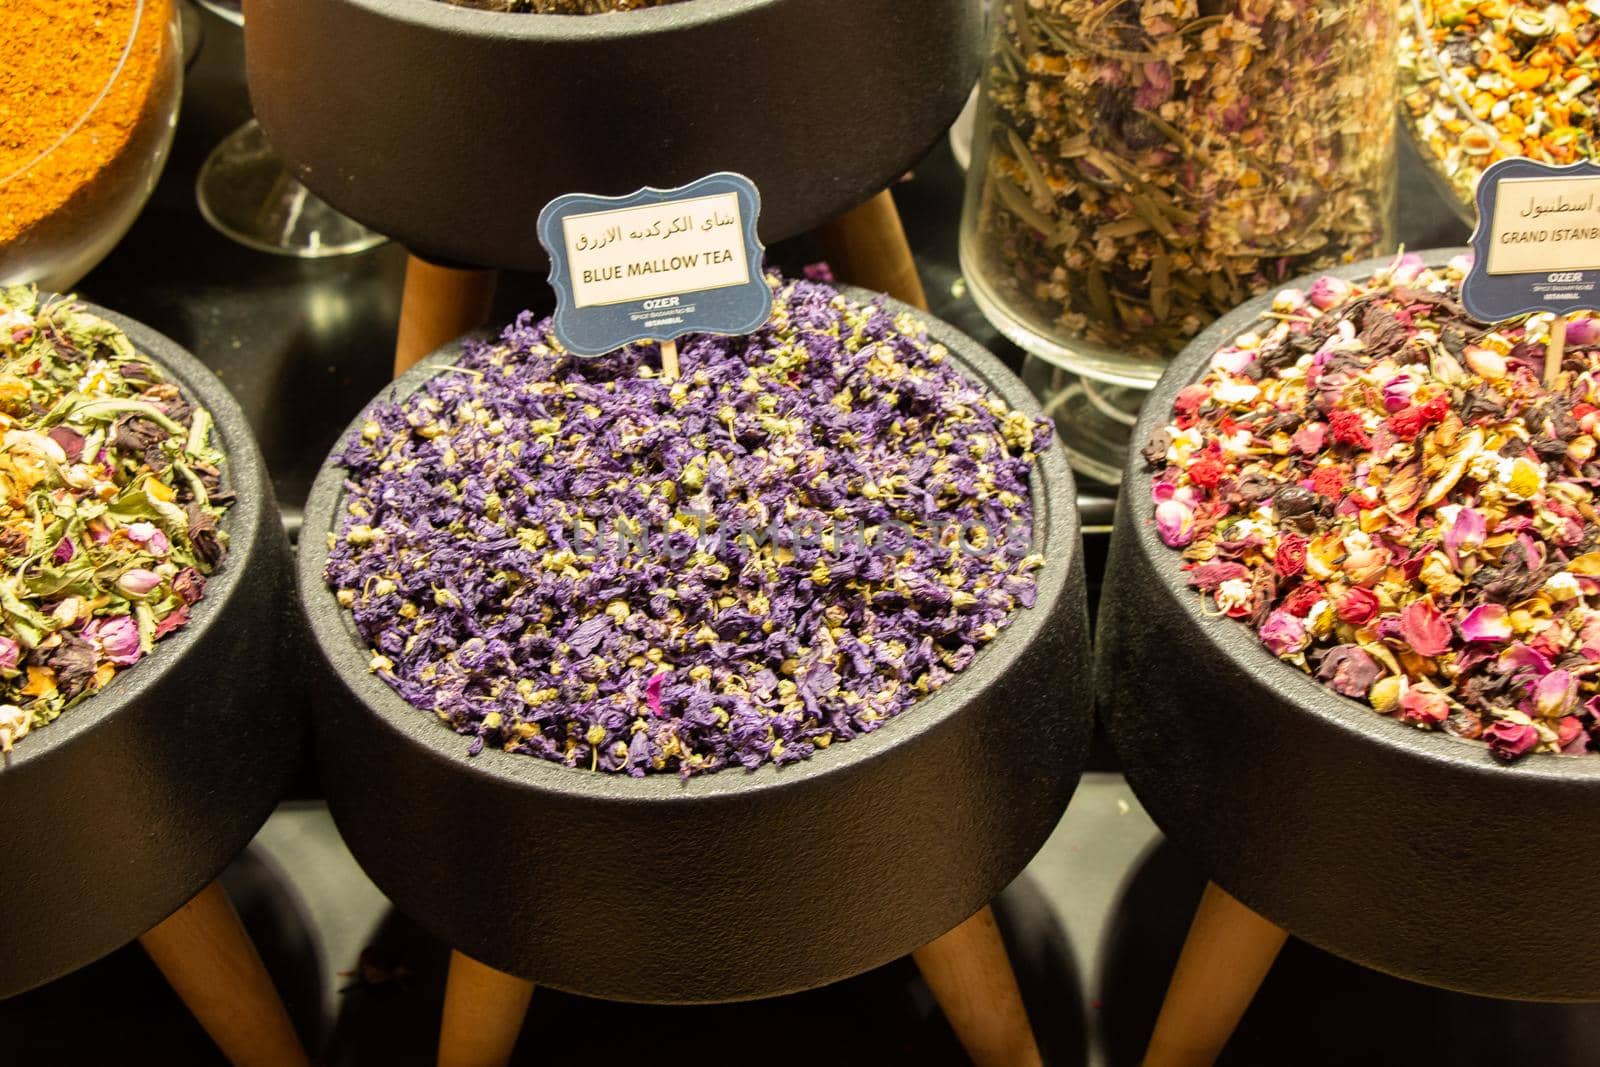 Dried tea,  fruits, herbs, flowers  at Istanbul Spice Bazaar  by berkay